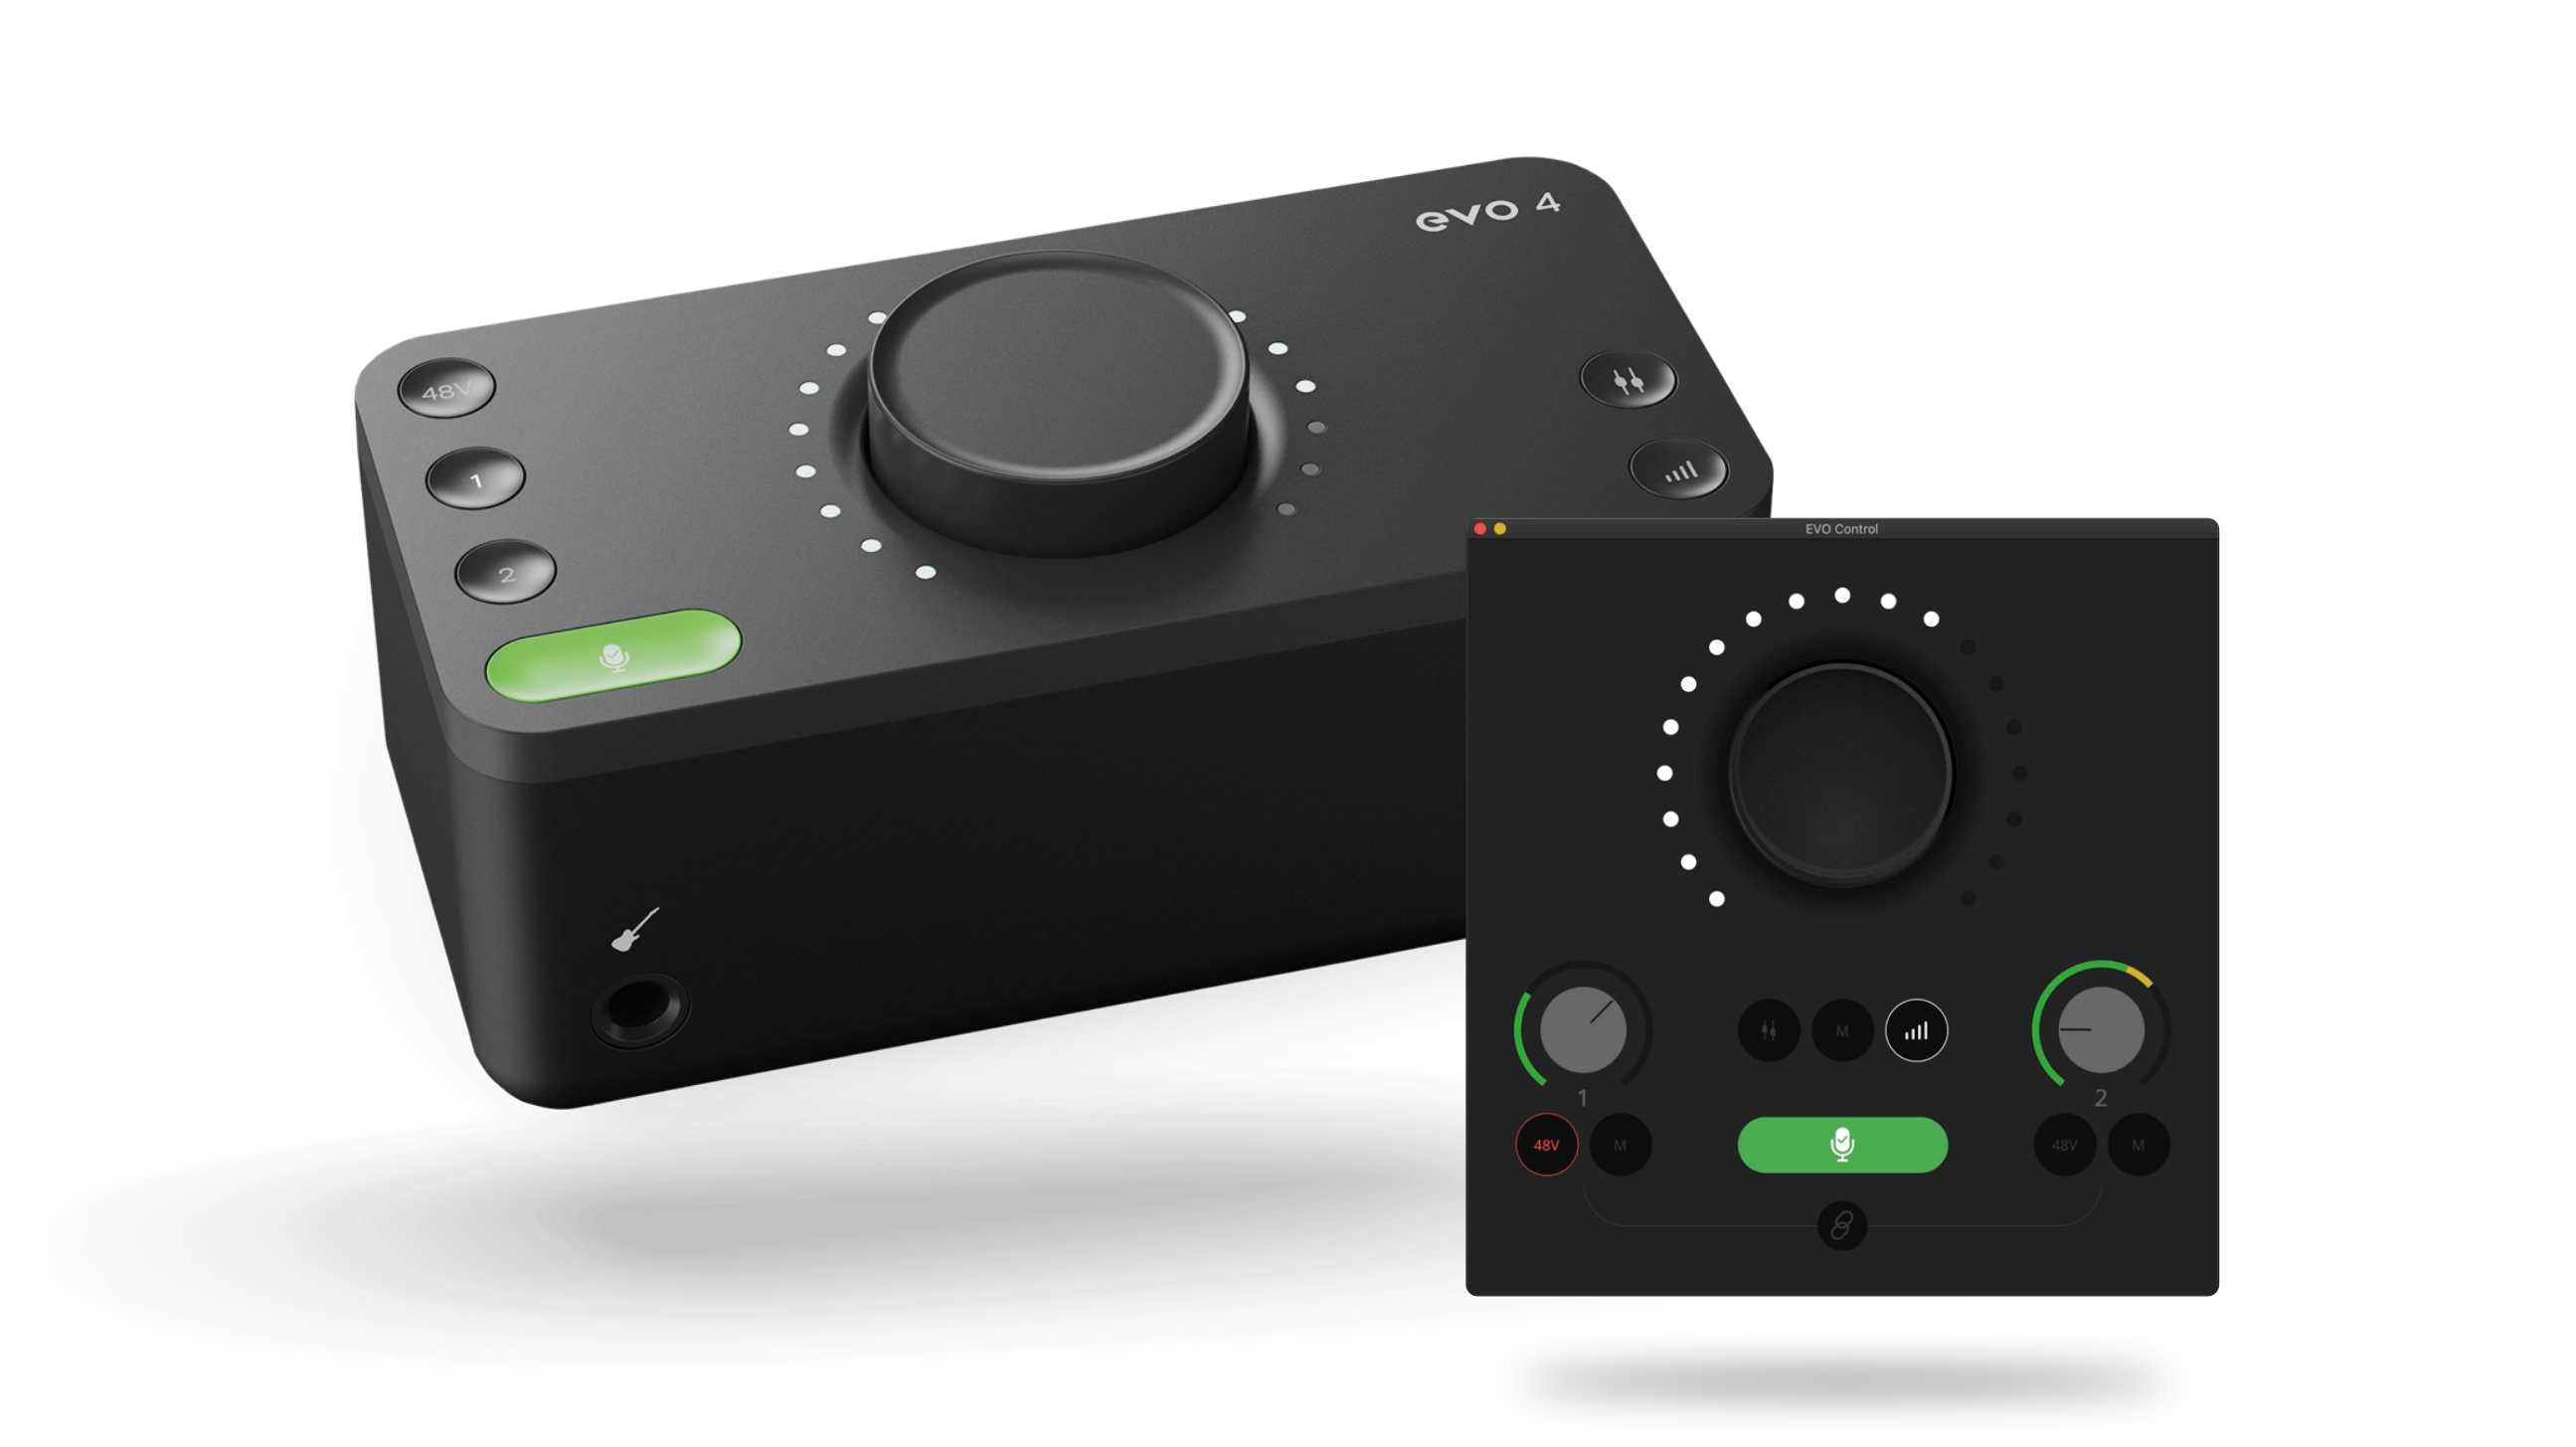 EVO 4 Audio Interface - Make great recordings effortless